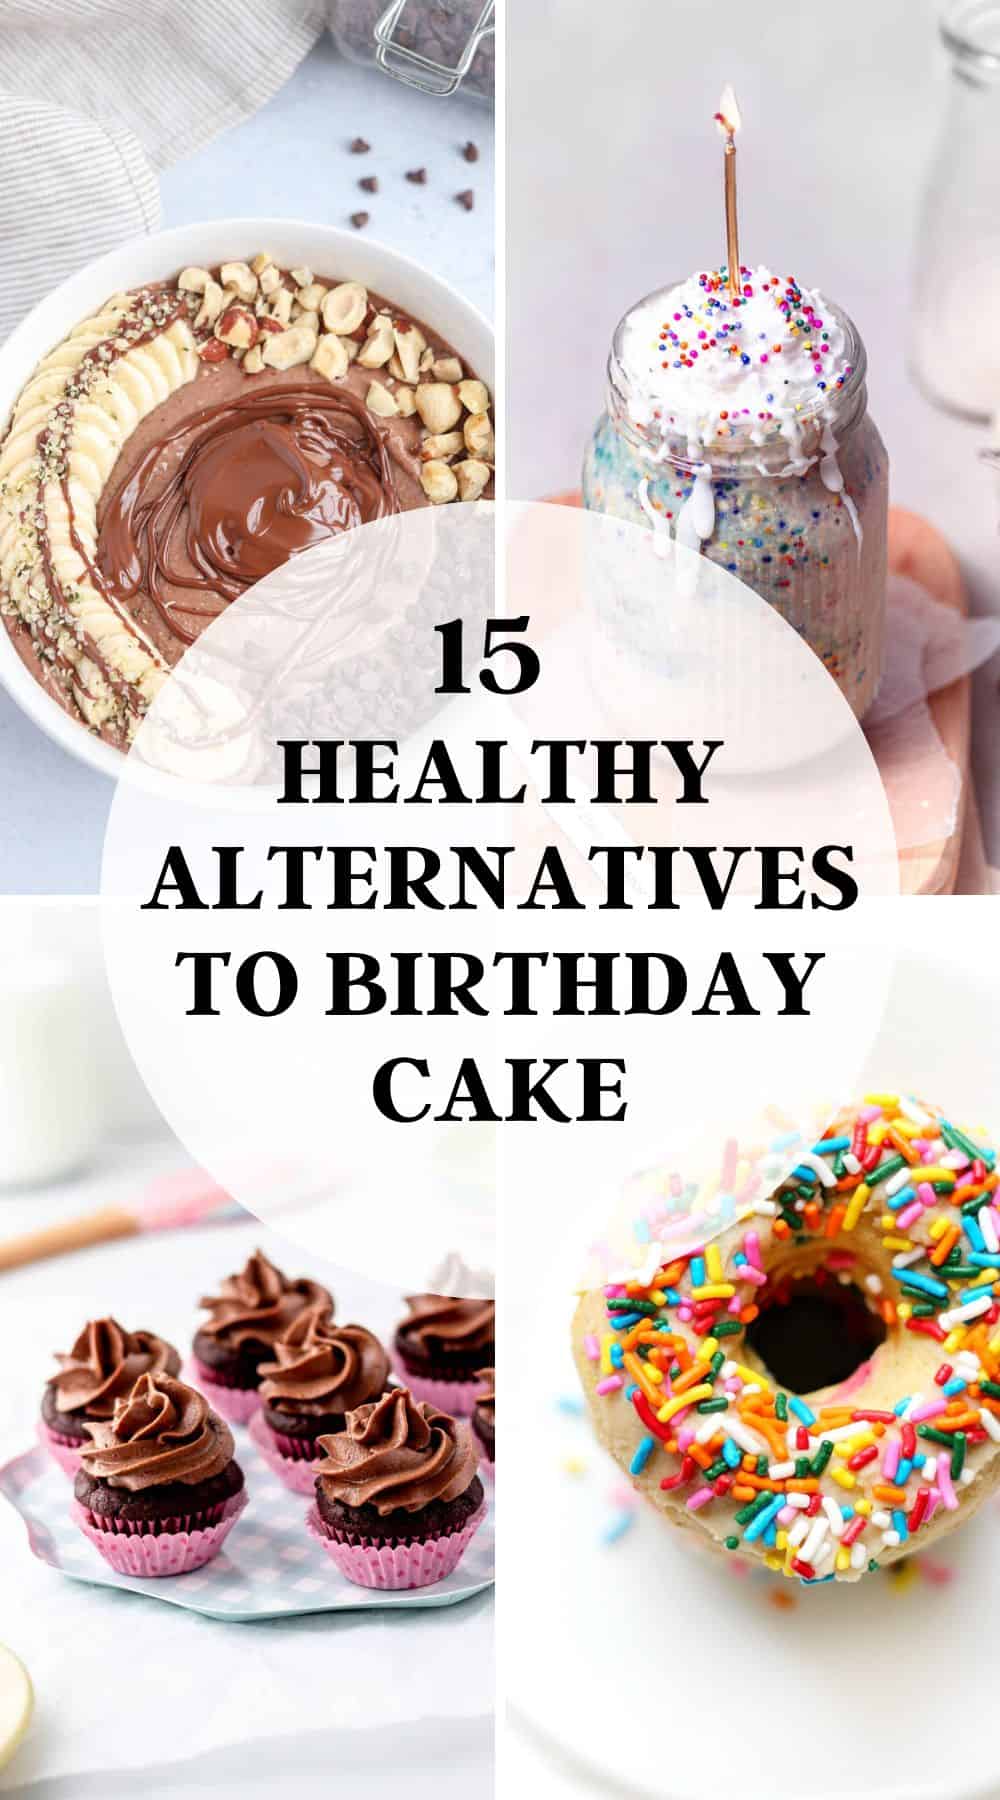 20 Birthday Cake Alternatives | Our Baking Blog: Cake, Cookie & Dessert  Recipes by Wilton